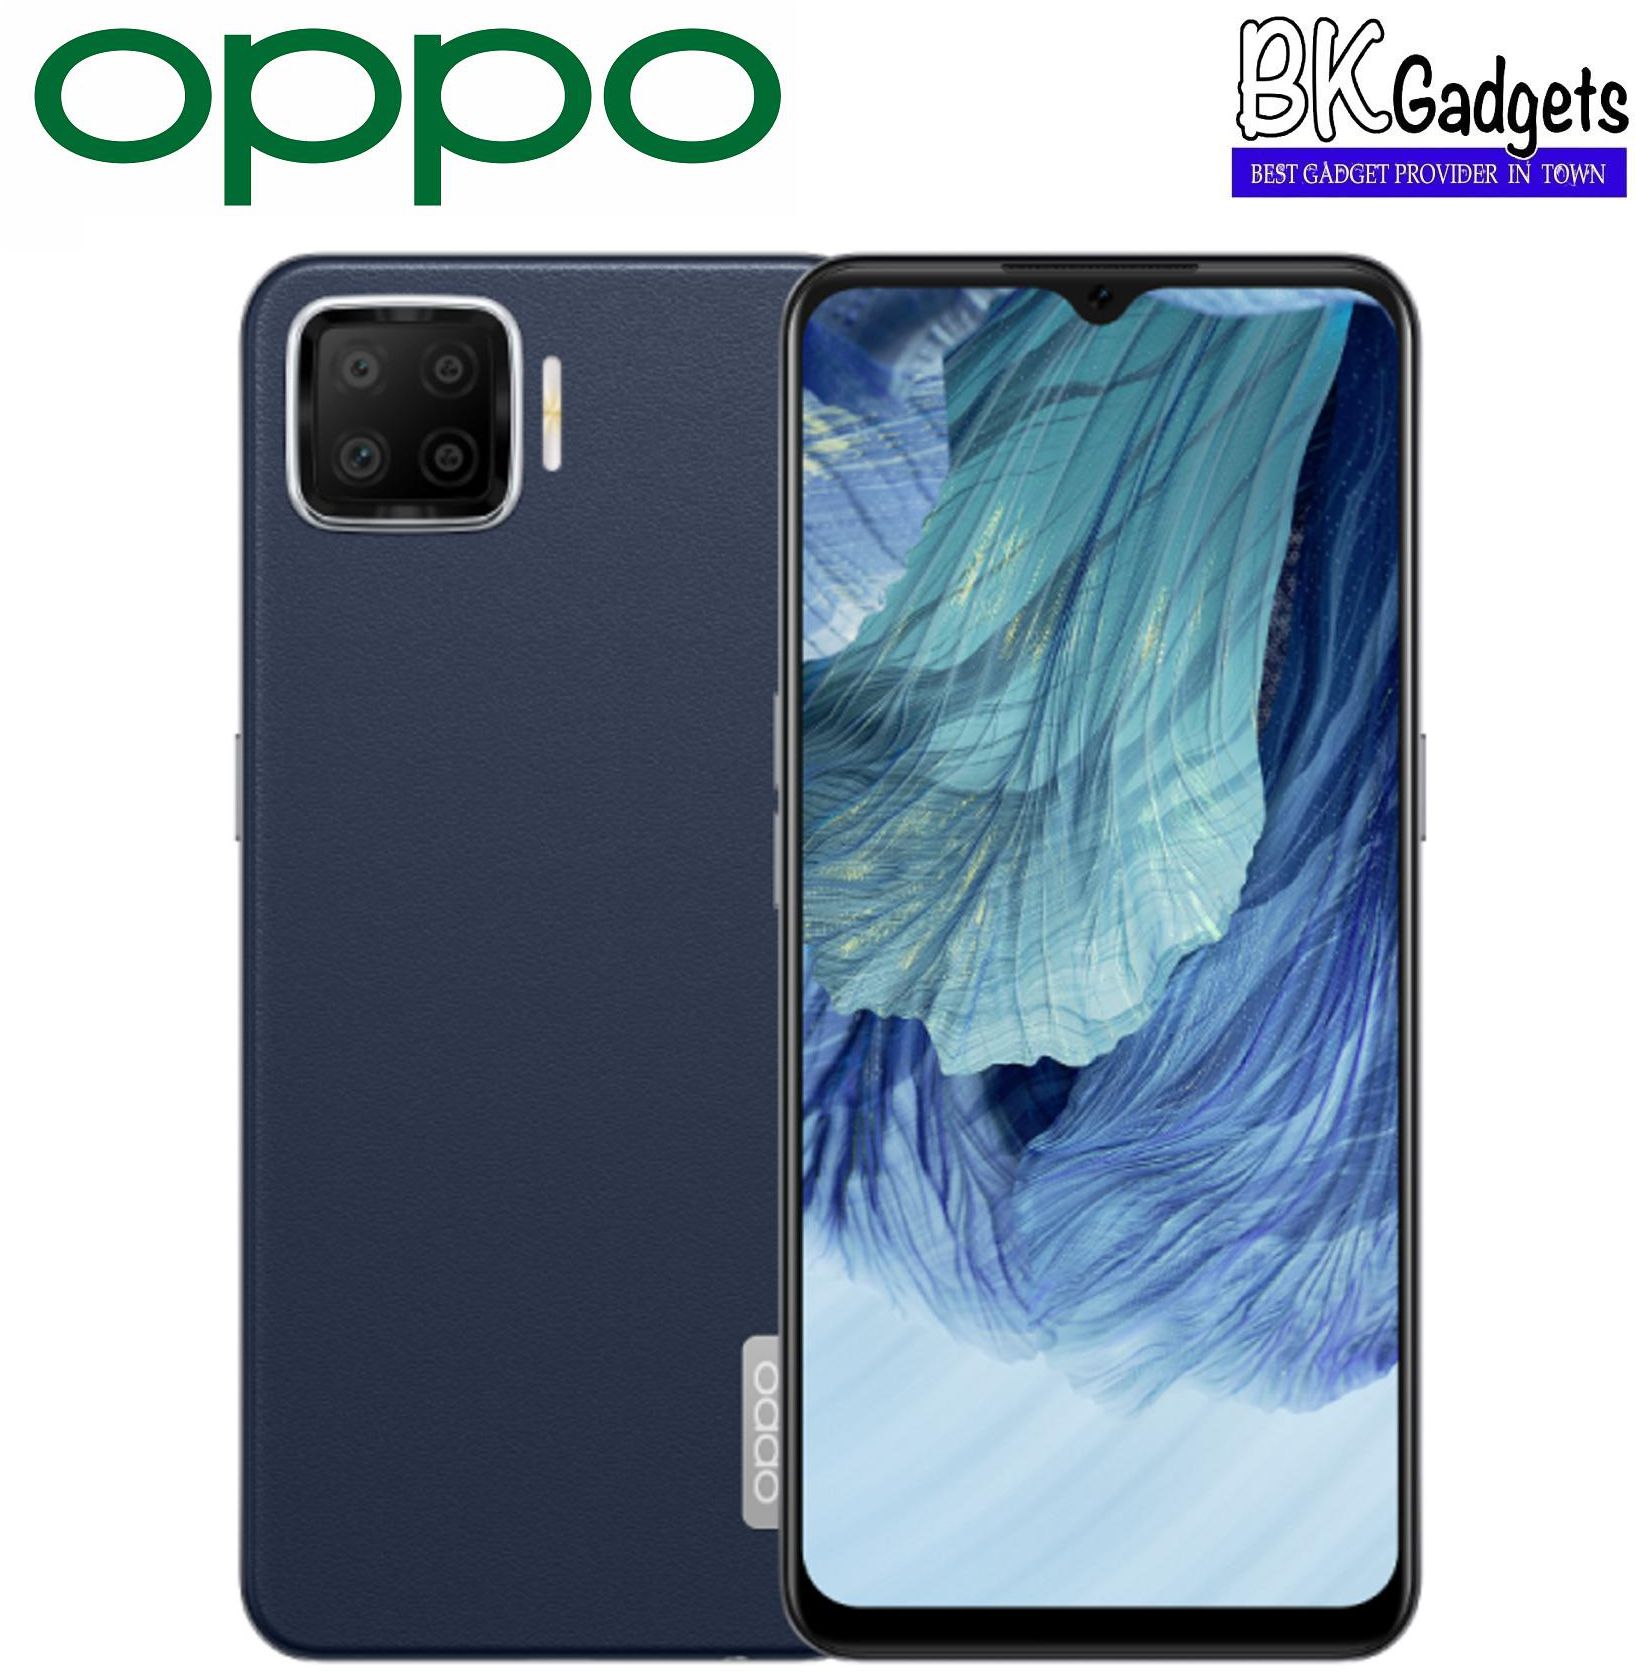 OPPO A73 [ 6GB  + 128GB ] Smartphone (Blue)